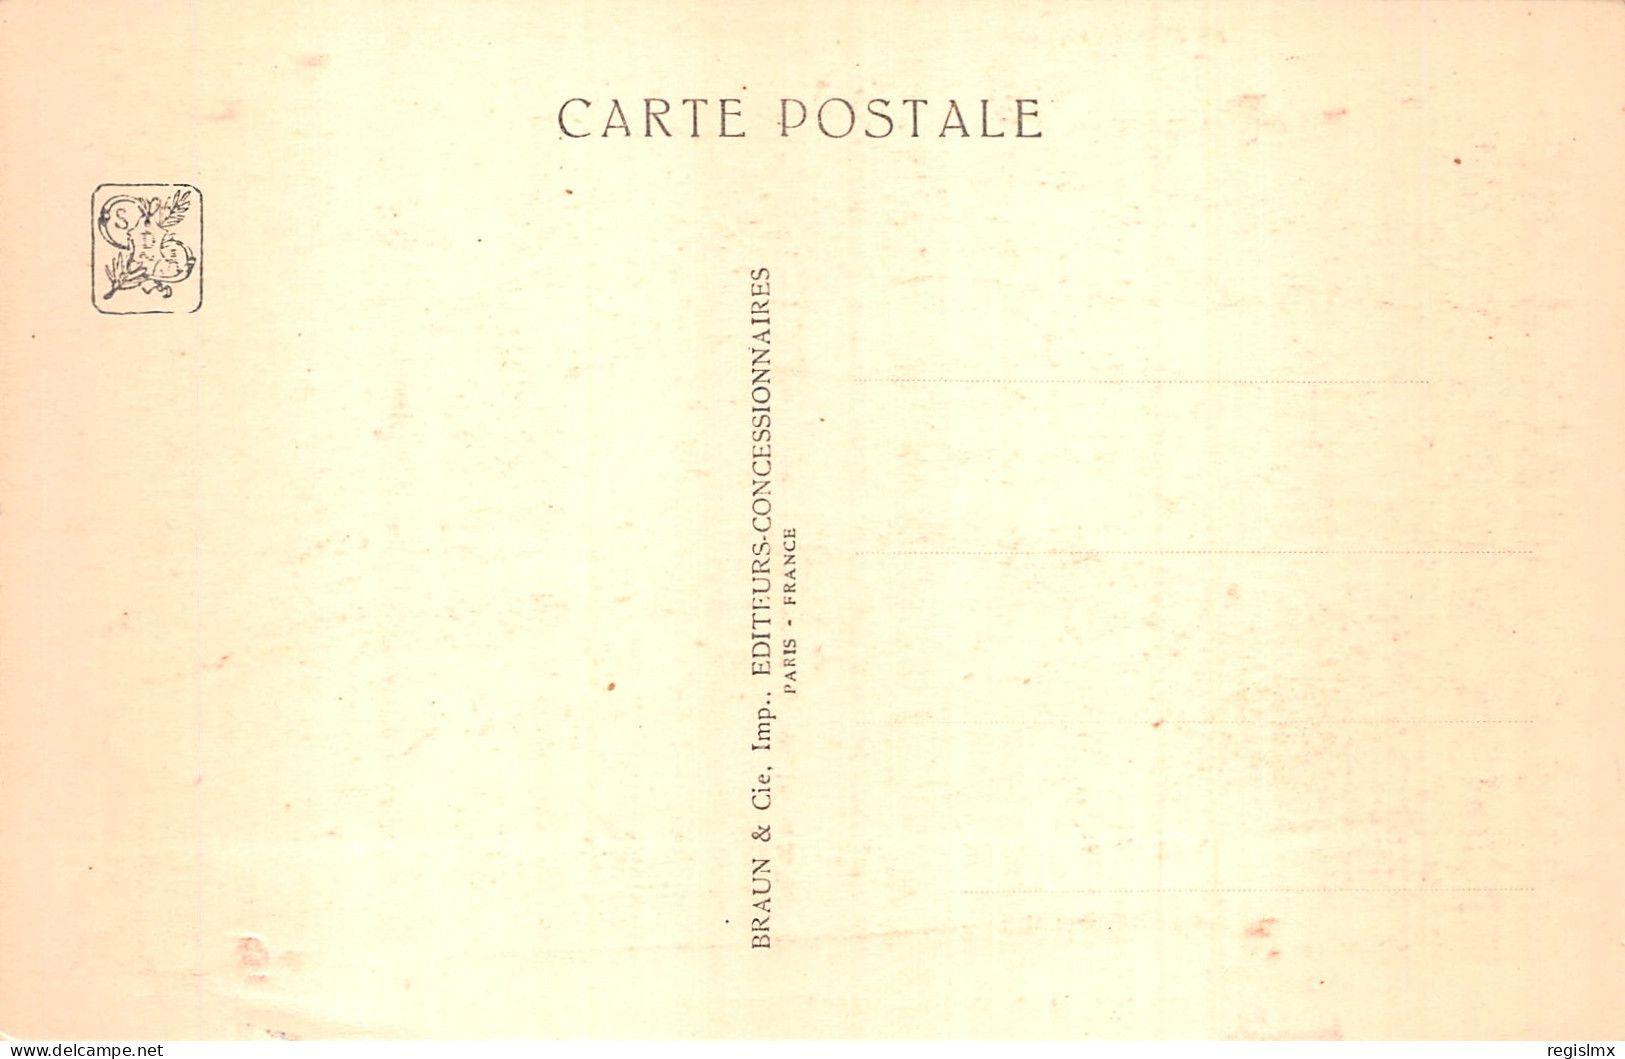 75-PARIS EXPOSITION COLONIALE INTERNATIONALE 1931 CAMEROUN TOGO -N°T1046-A/0203 - Exhibitions